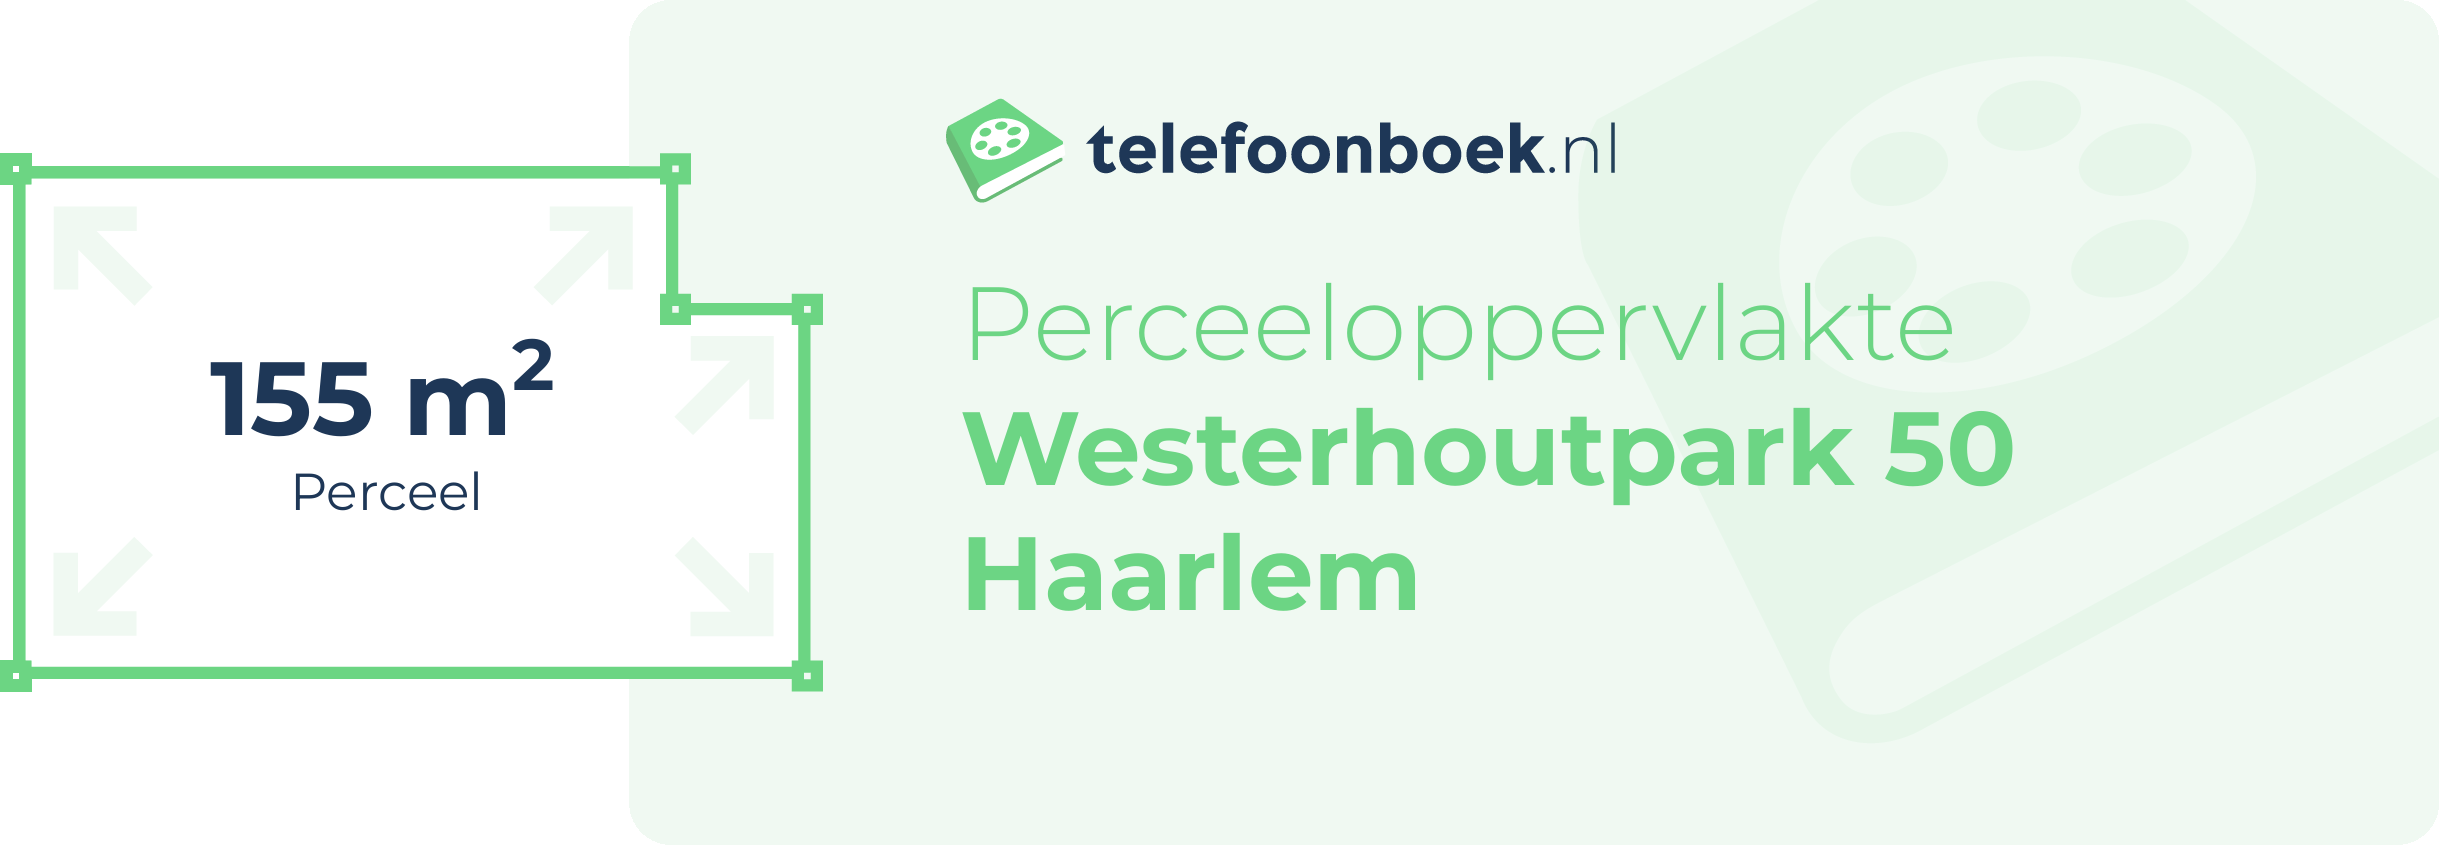 Perceeloppervlakte Westerhoutpark 50 Haarlem